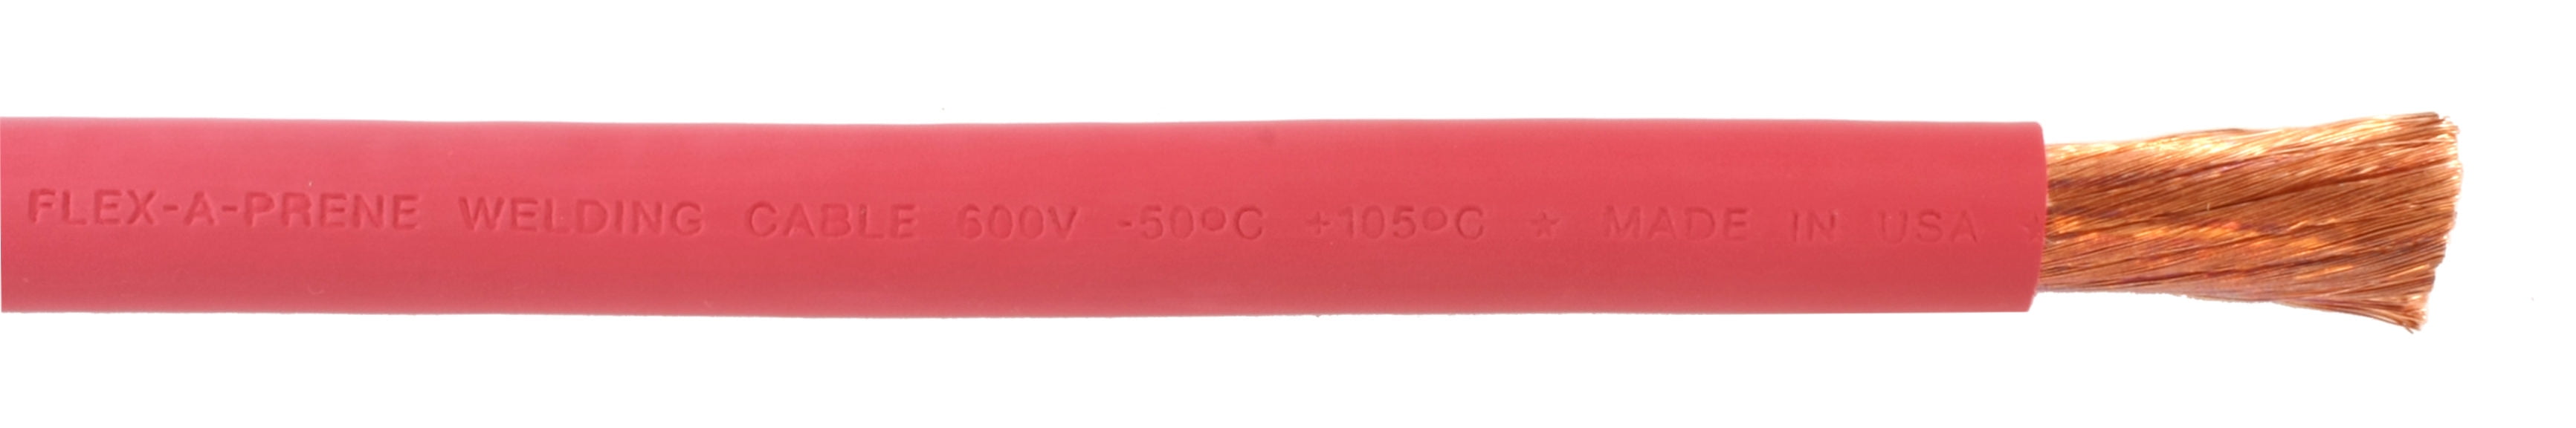 3/0 Gauge AWG 50 FEET Flex-A-Prene 600 V Red Welding/Battery Cable Made in USA 